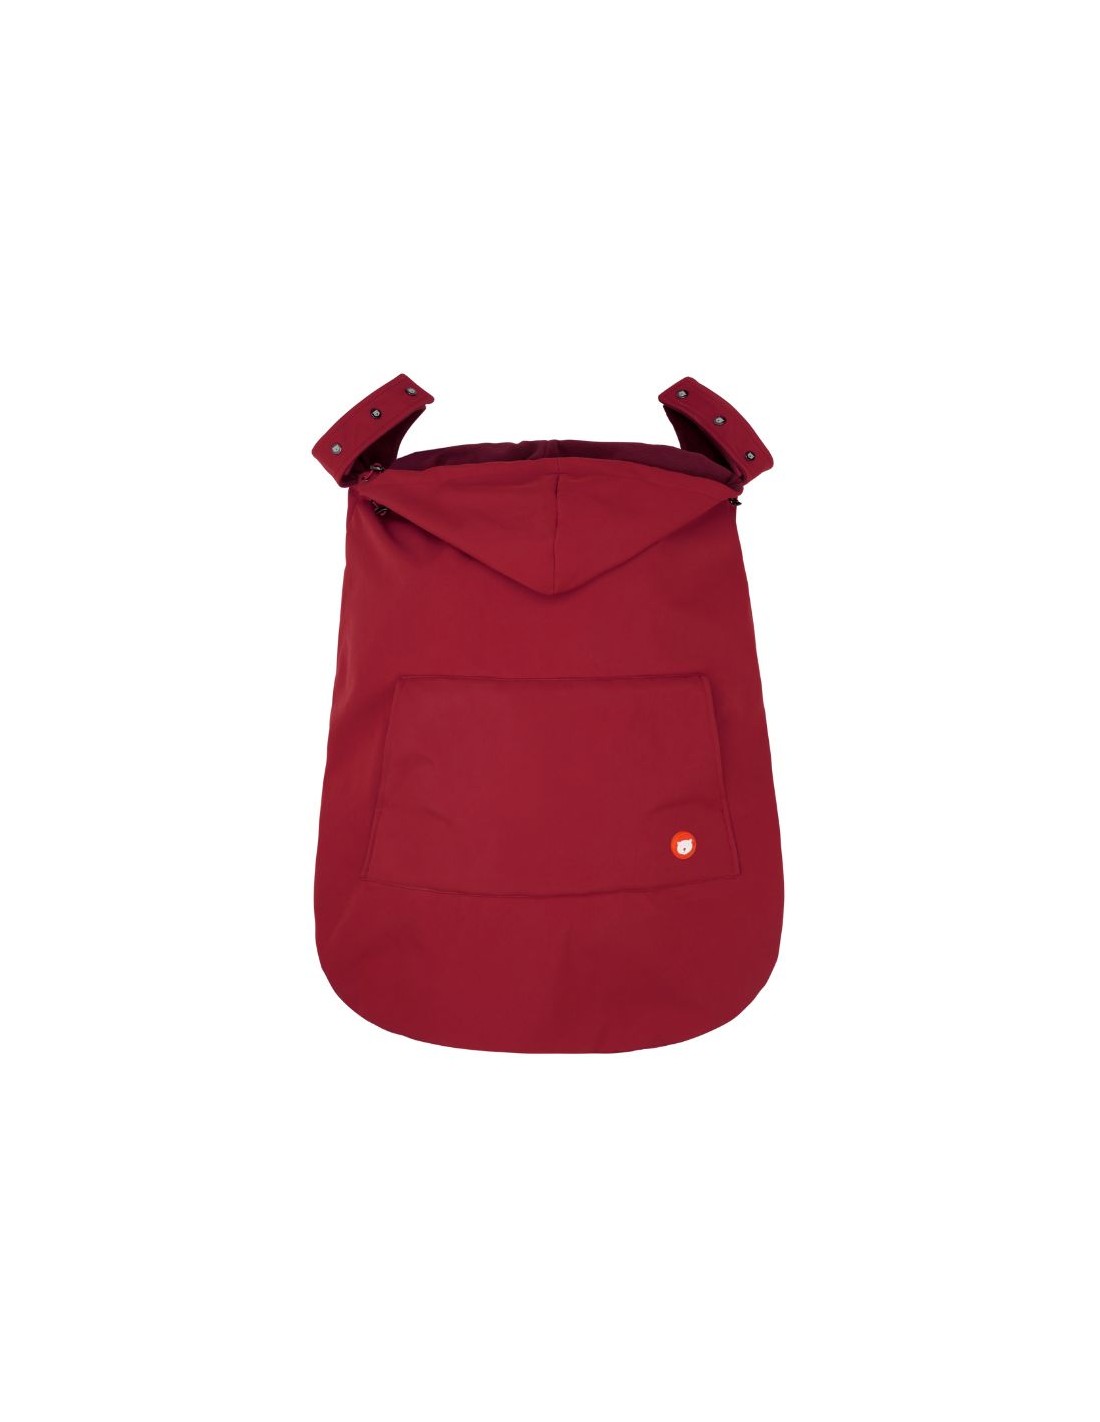 Kangura portanadons Cobertor de porteig Wombat Shell Rojo